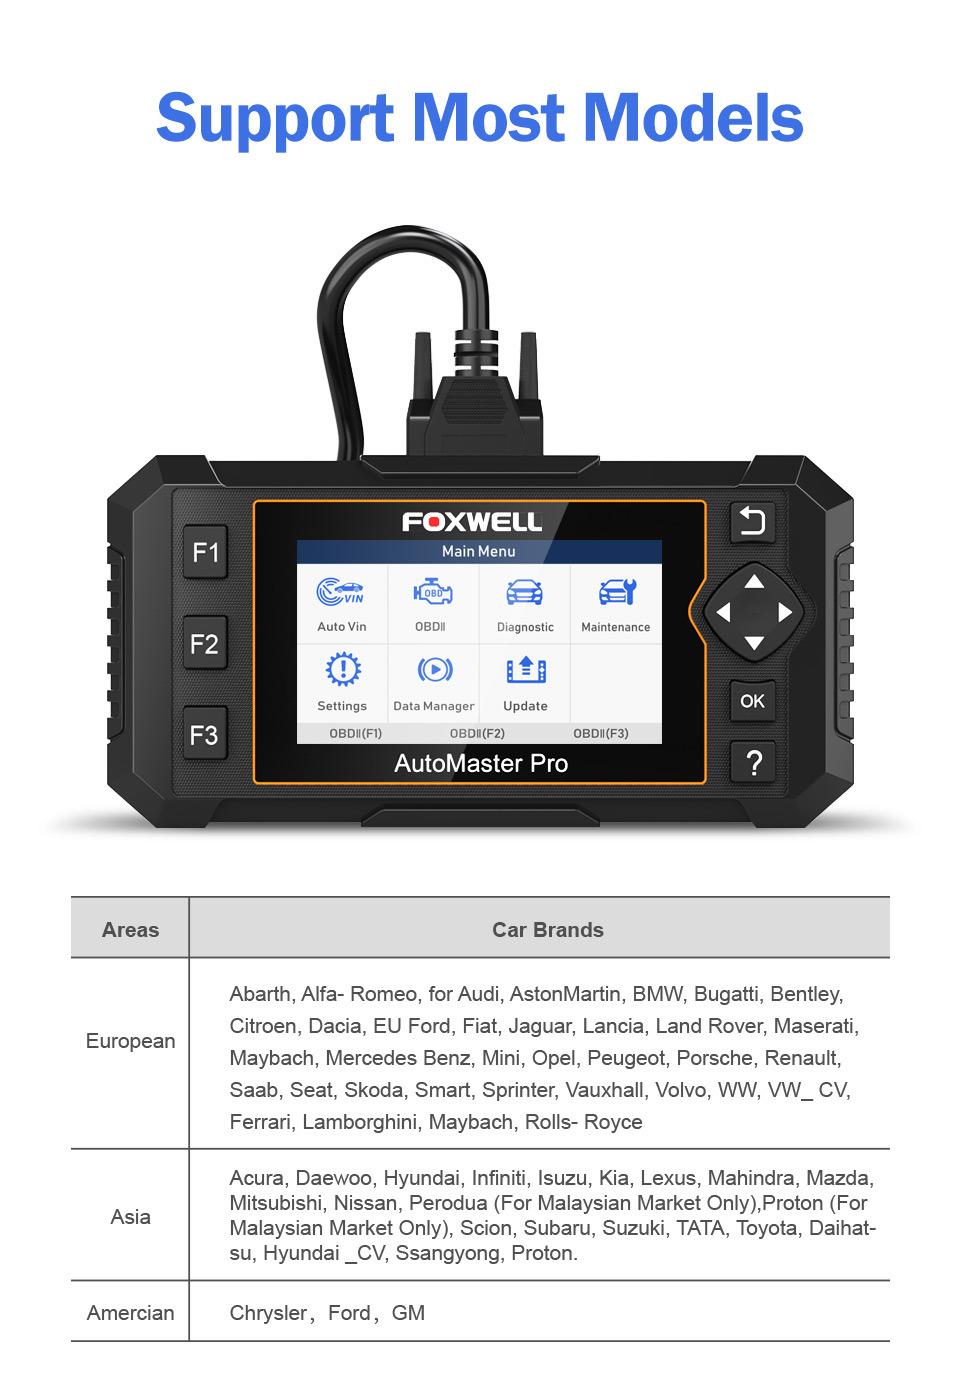 Foxwell Nt644 Elite OBD2 Workshop Car Diagnostic Tool Professional DPF Epb Oil Reset Automotive Scanner Full System